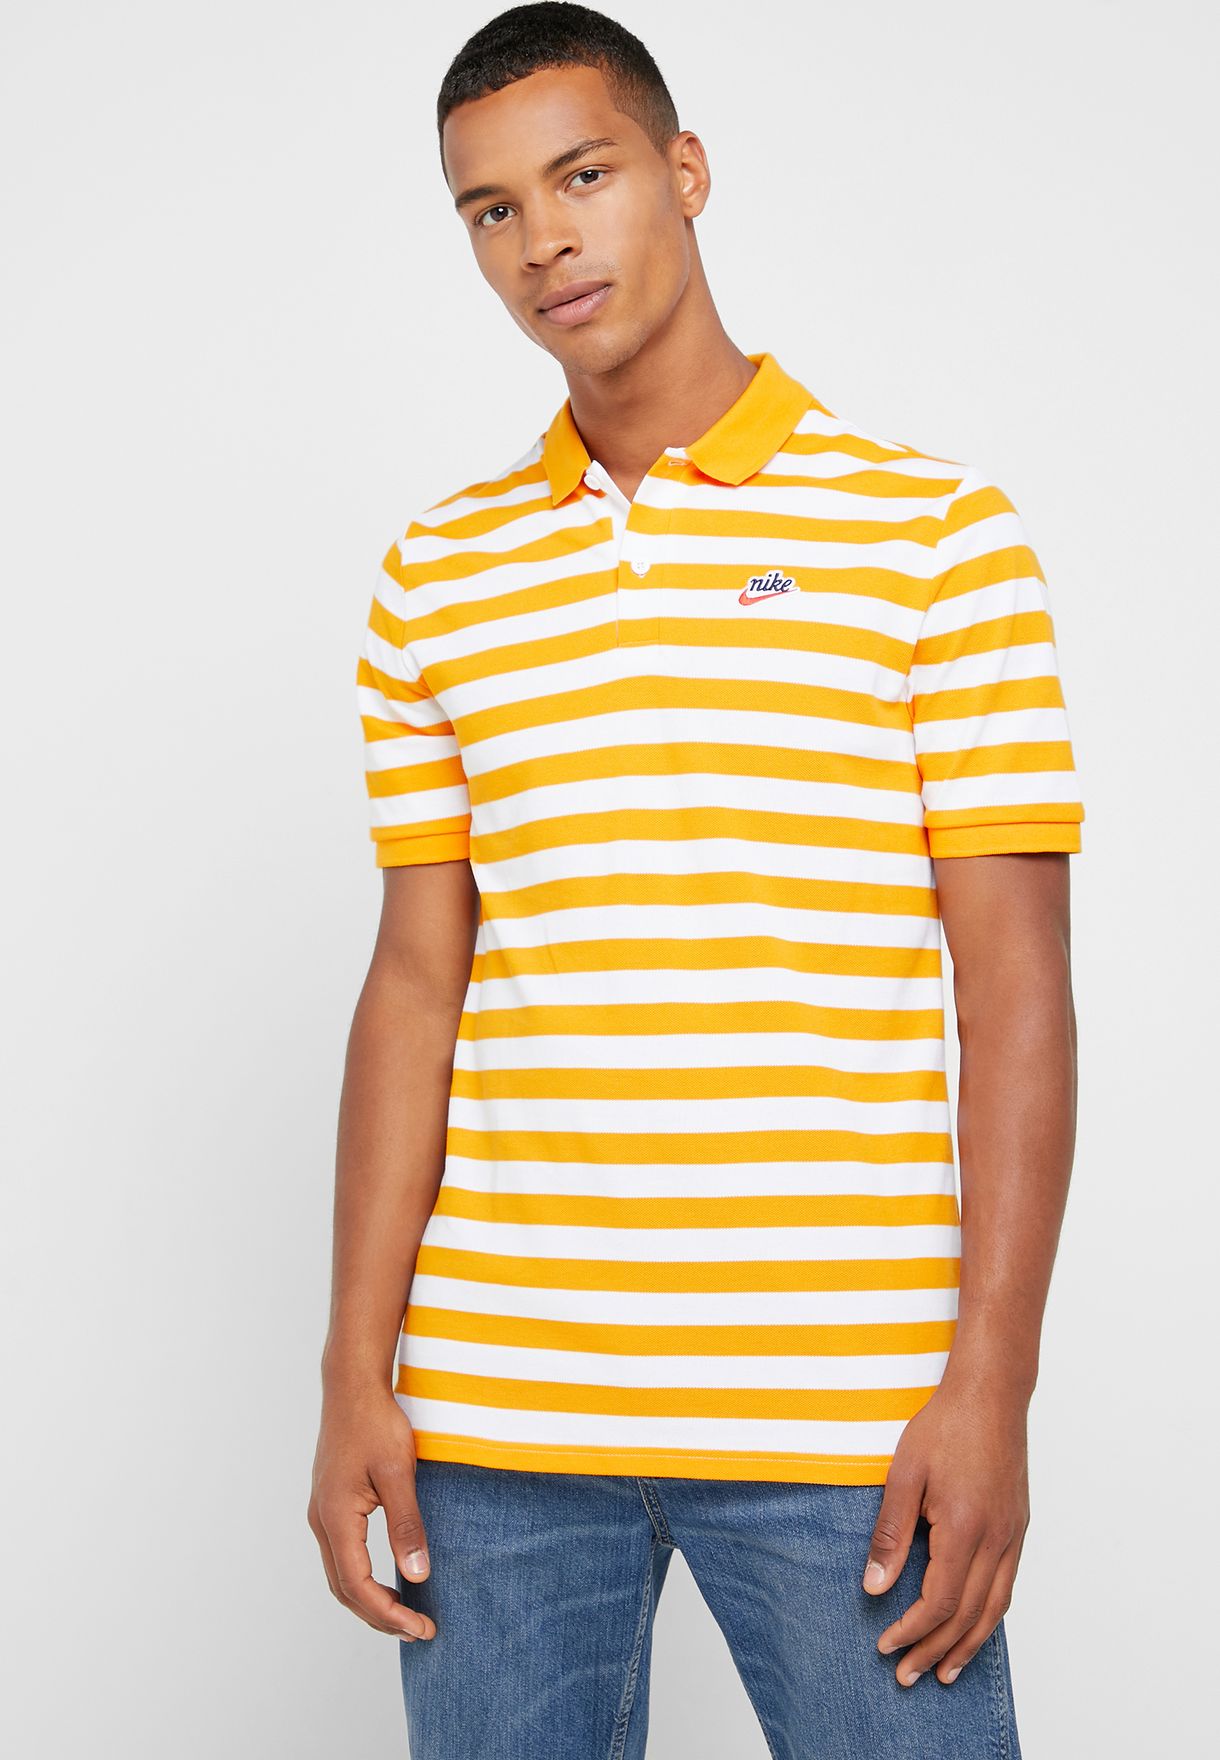 nike logo striped polo shirt